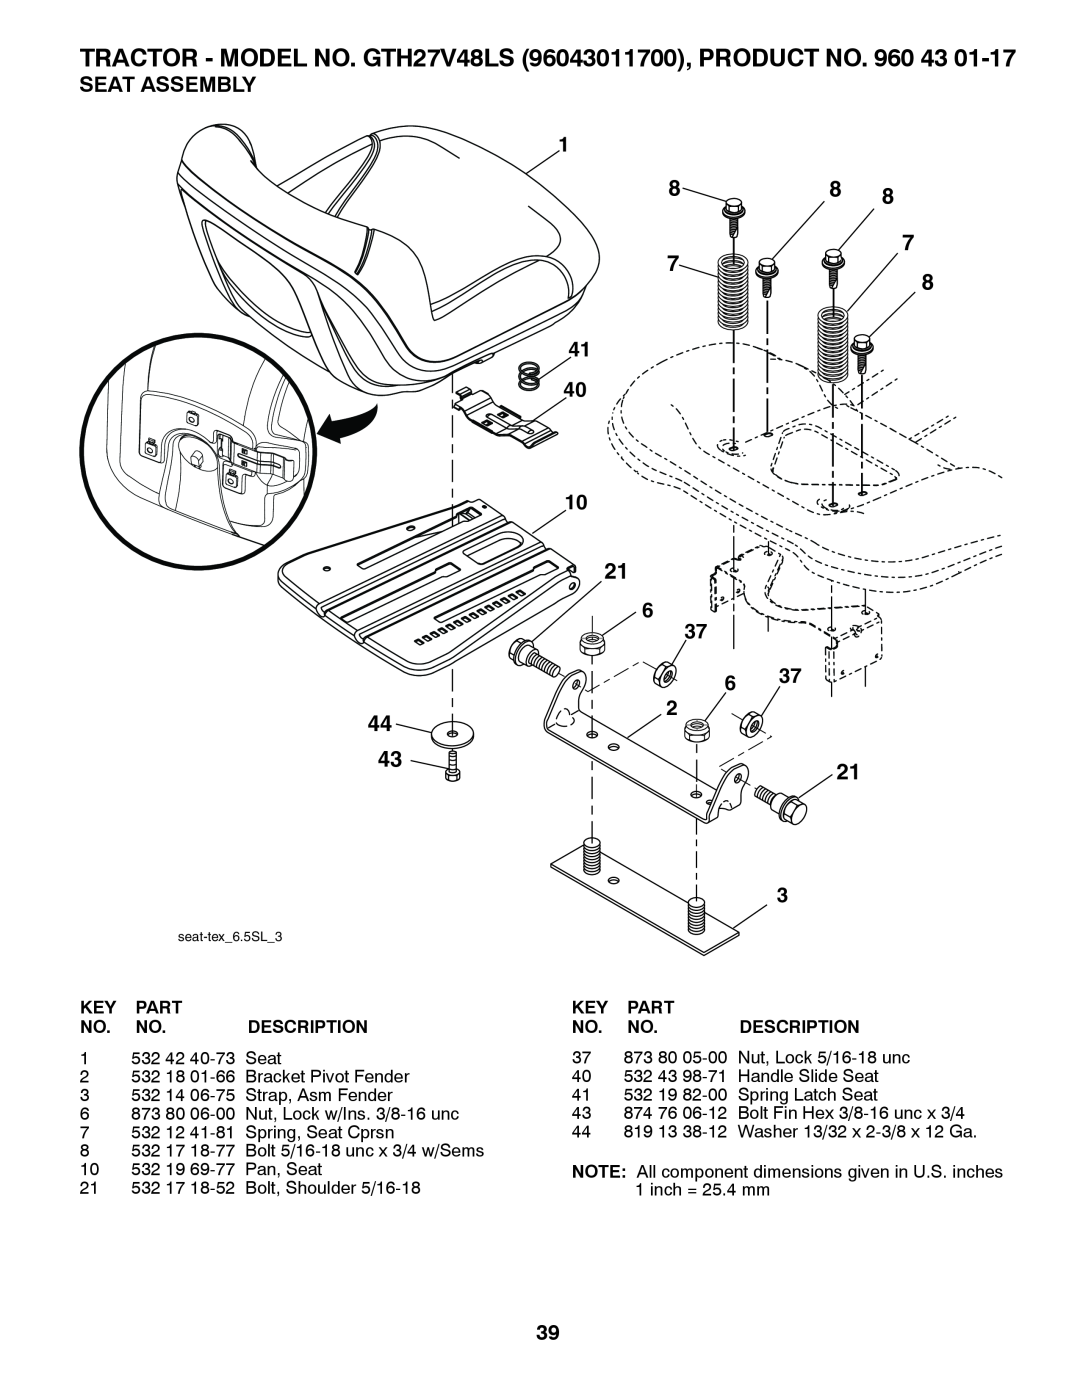 Husqvarna owner manual Seat Assembly, TRACTOR - MODEL NO. GTH27V48LS 96043011700, PRODUCT NO. 960 43, Part, Description 